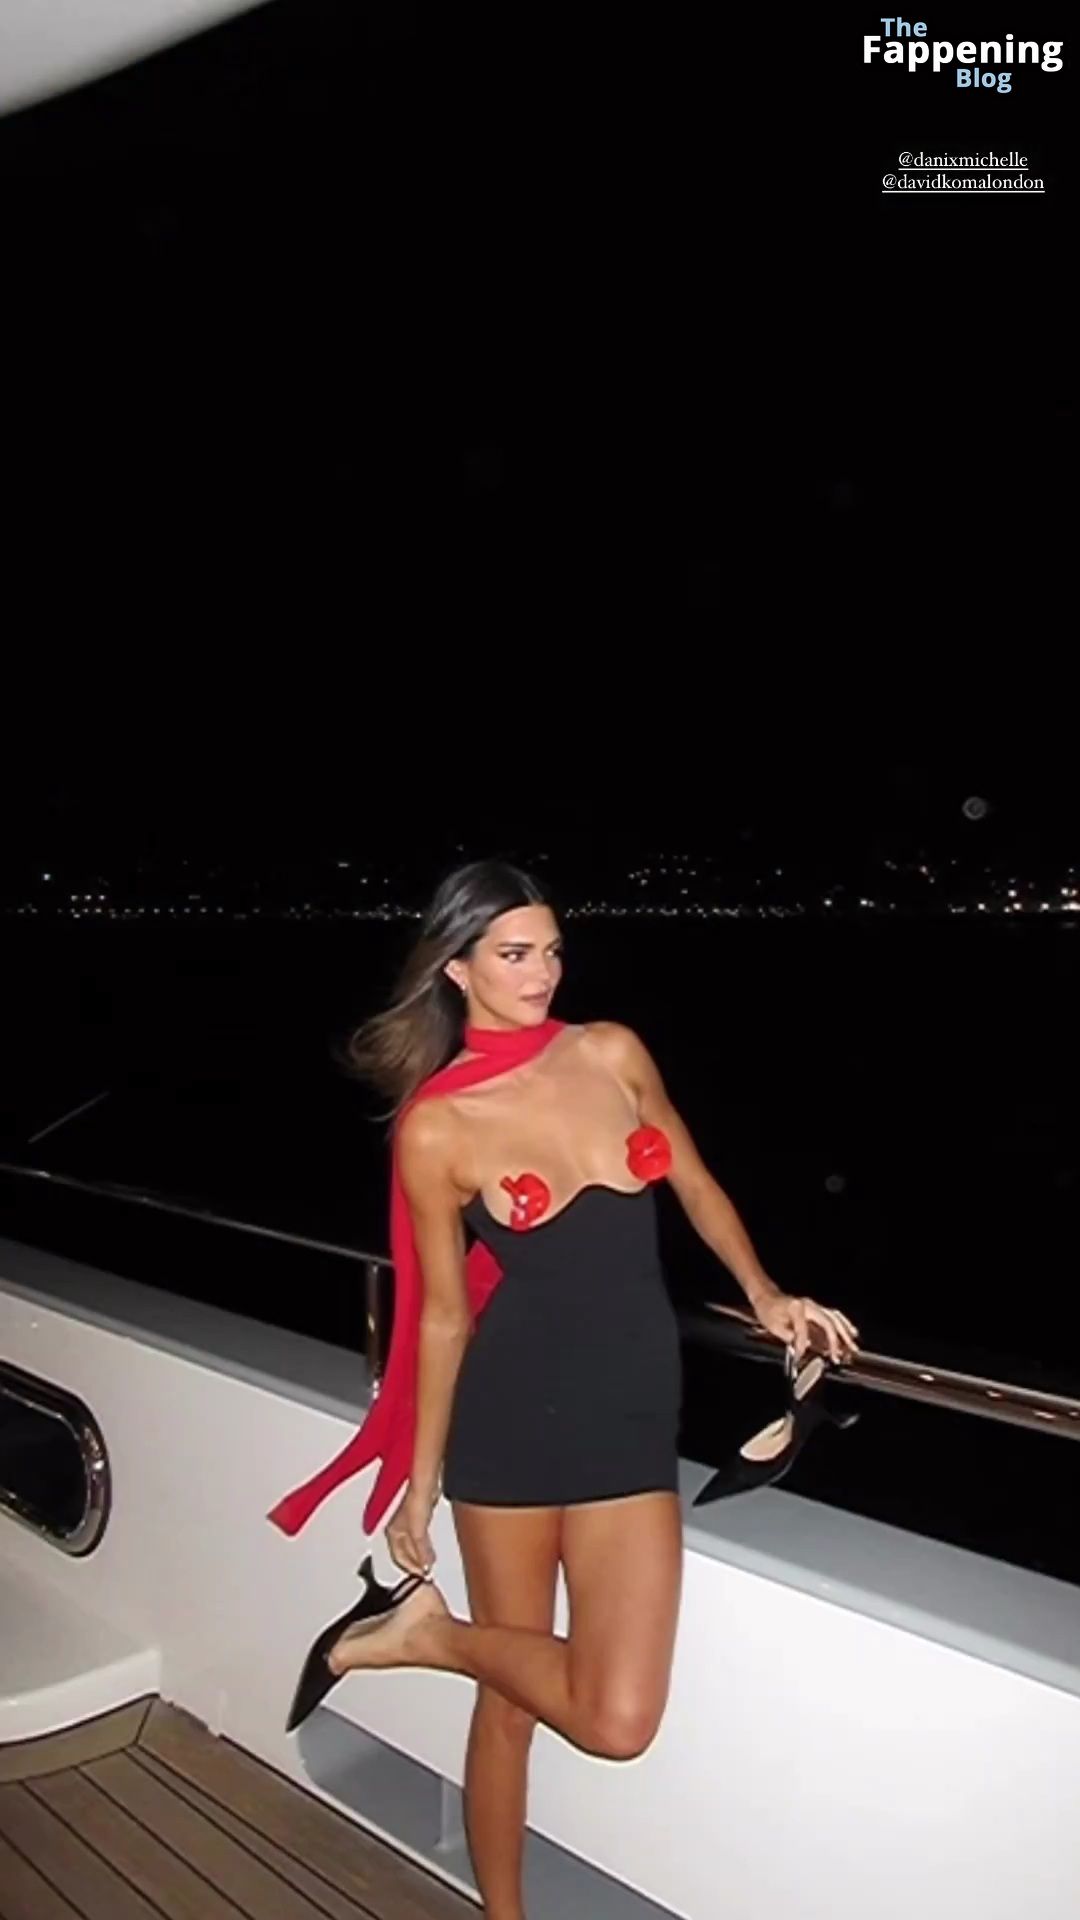 Kendall-Jenner-Topless-The-Fappening-Blog-3-1.jpg